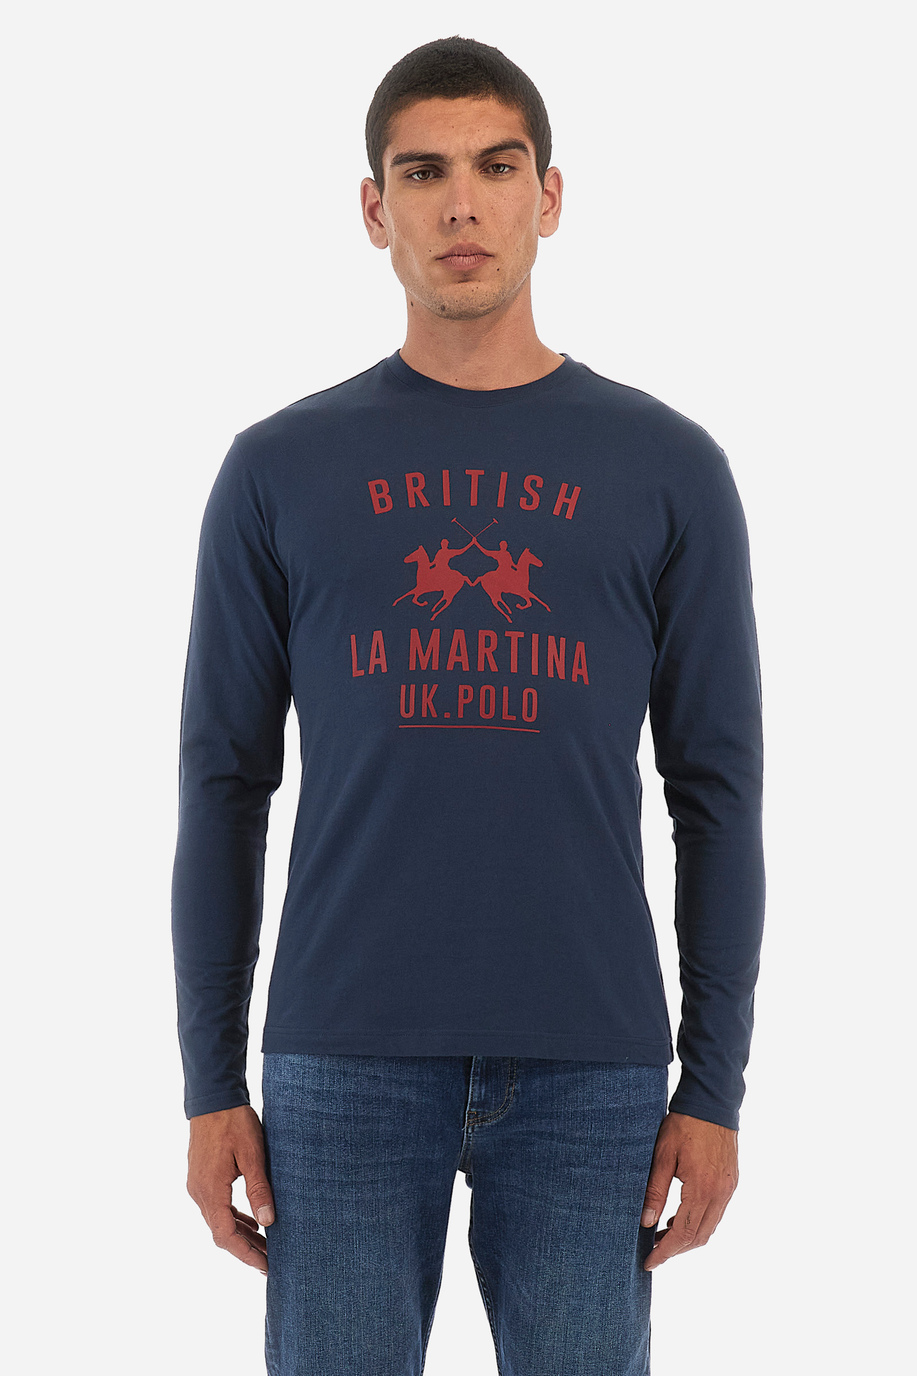 T-shirt uomo regular fit - Willson - Piccoli pensieri per lui | La Martina - Official Online Shop